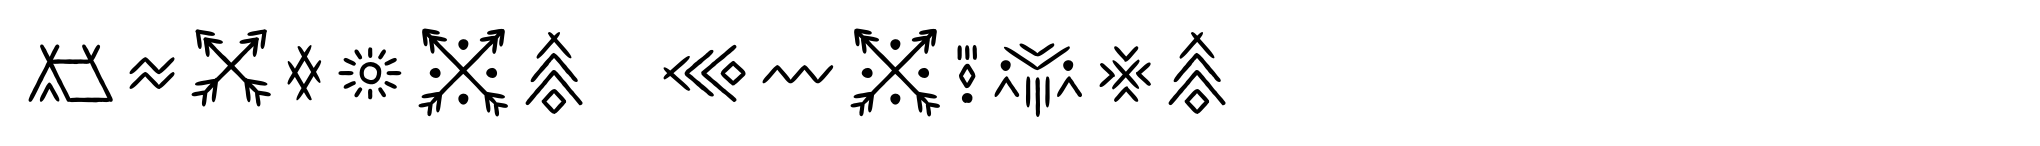 Wigwams Symbols image